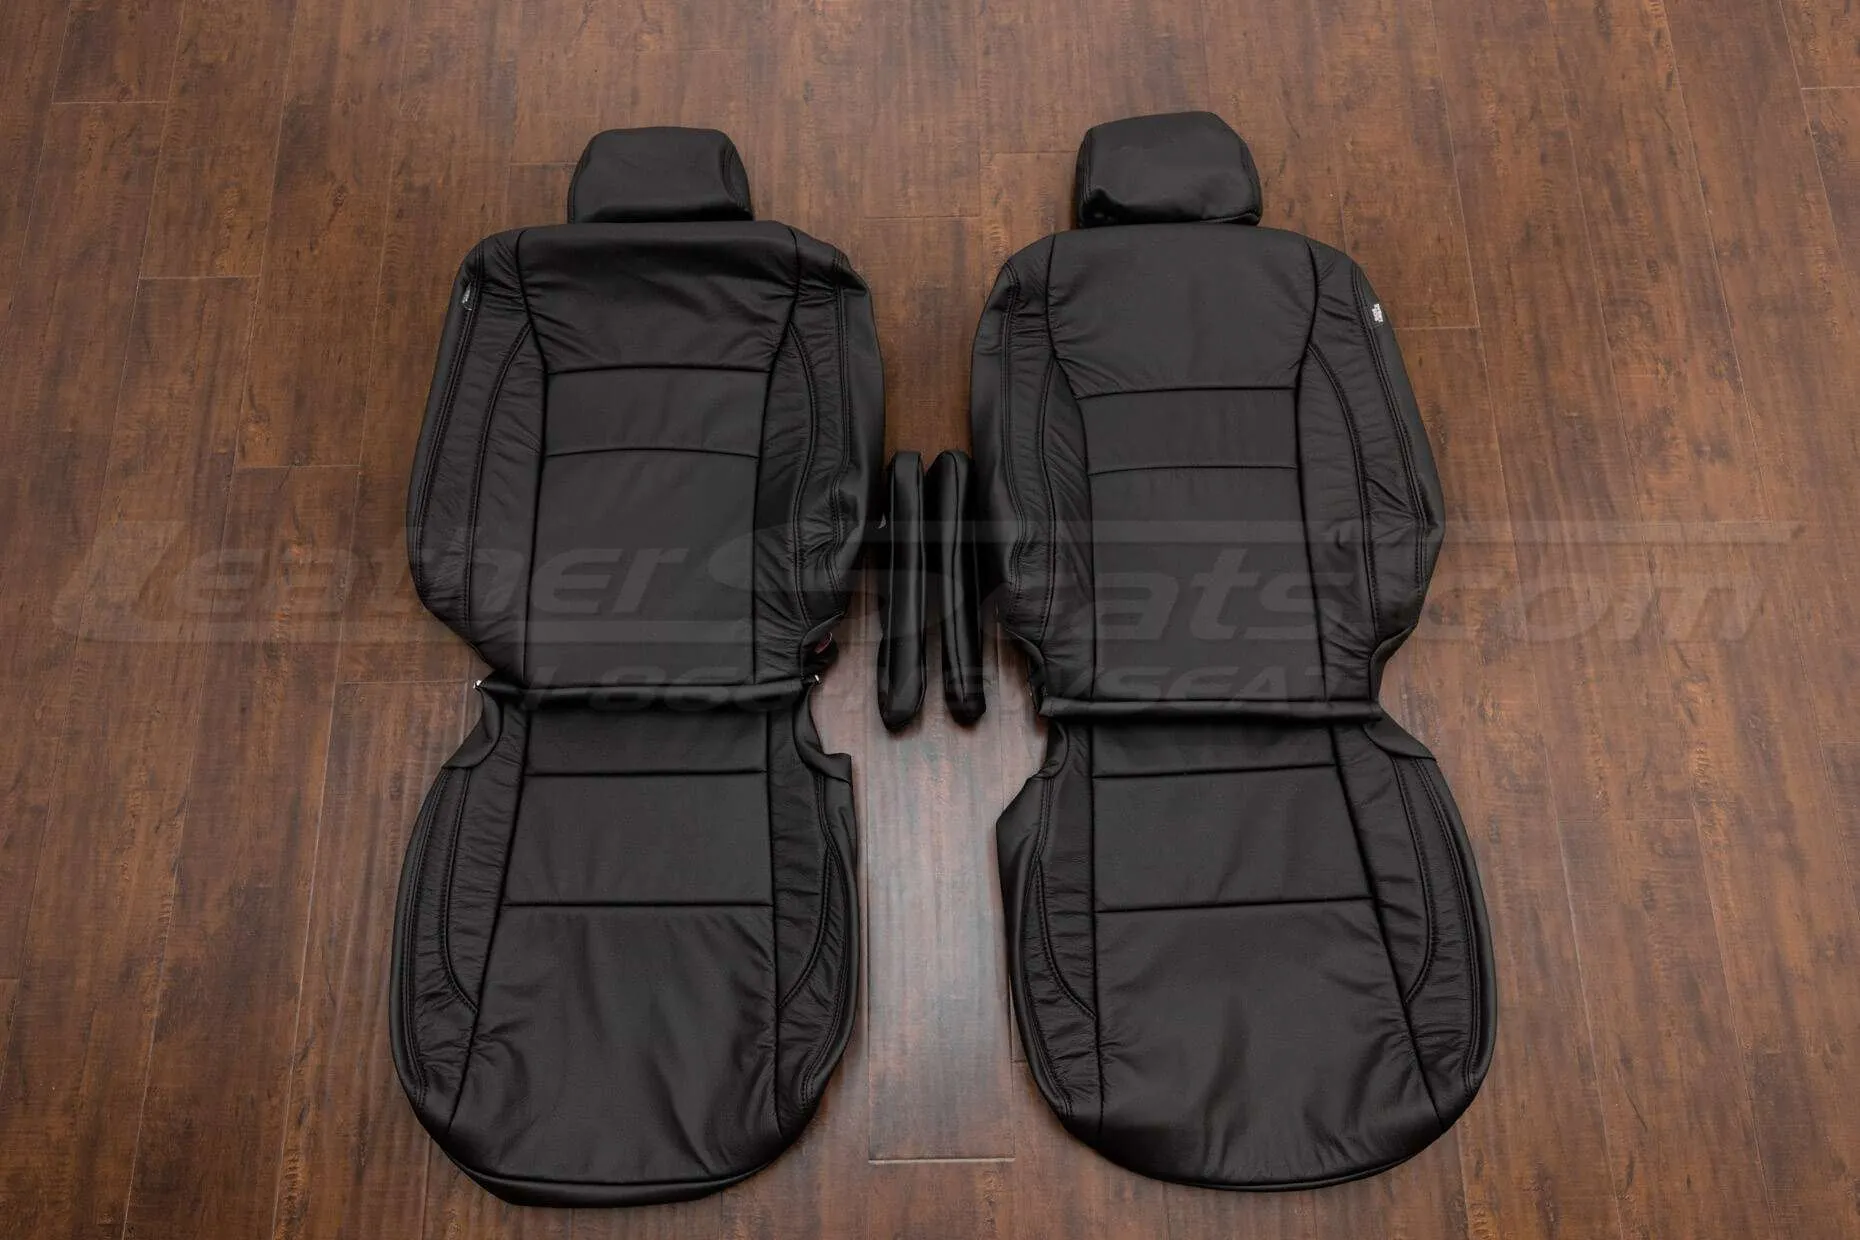 Honda Pilot Leather Seat Kit - Blackk - Front seat upholstery and armrests